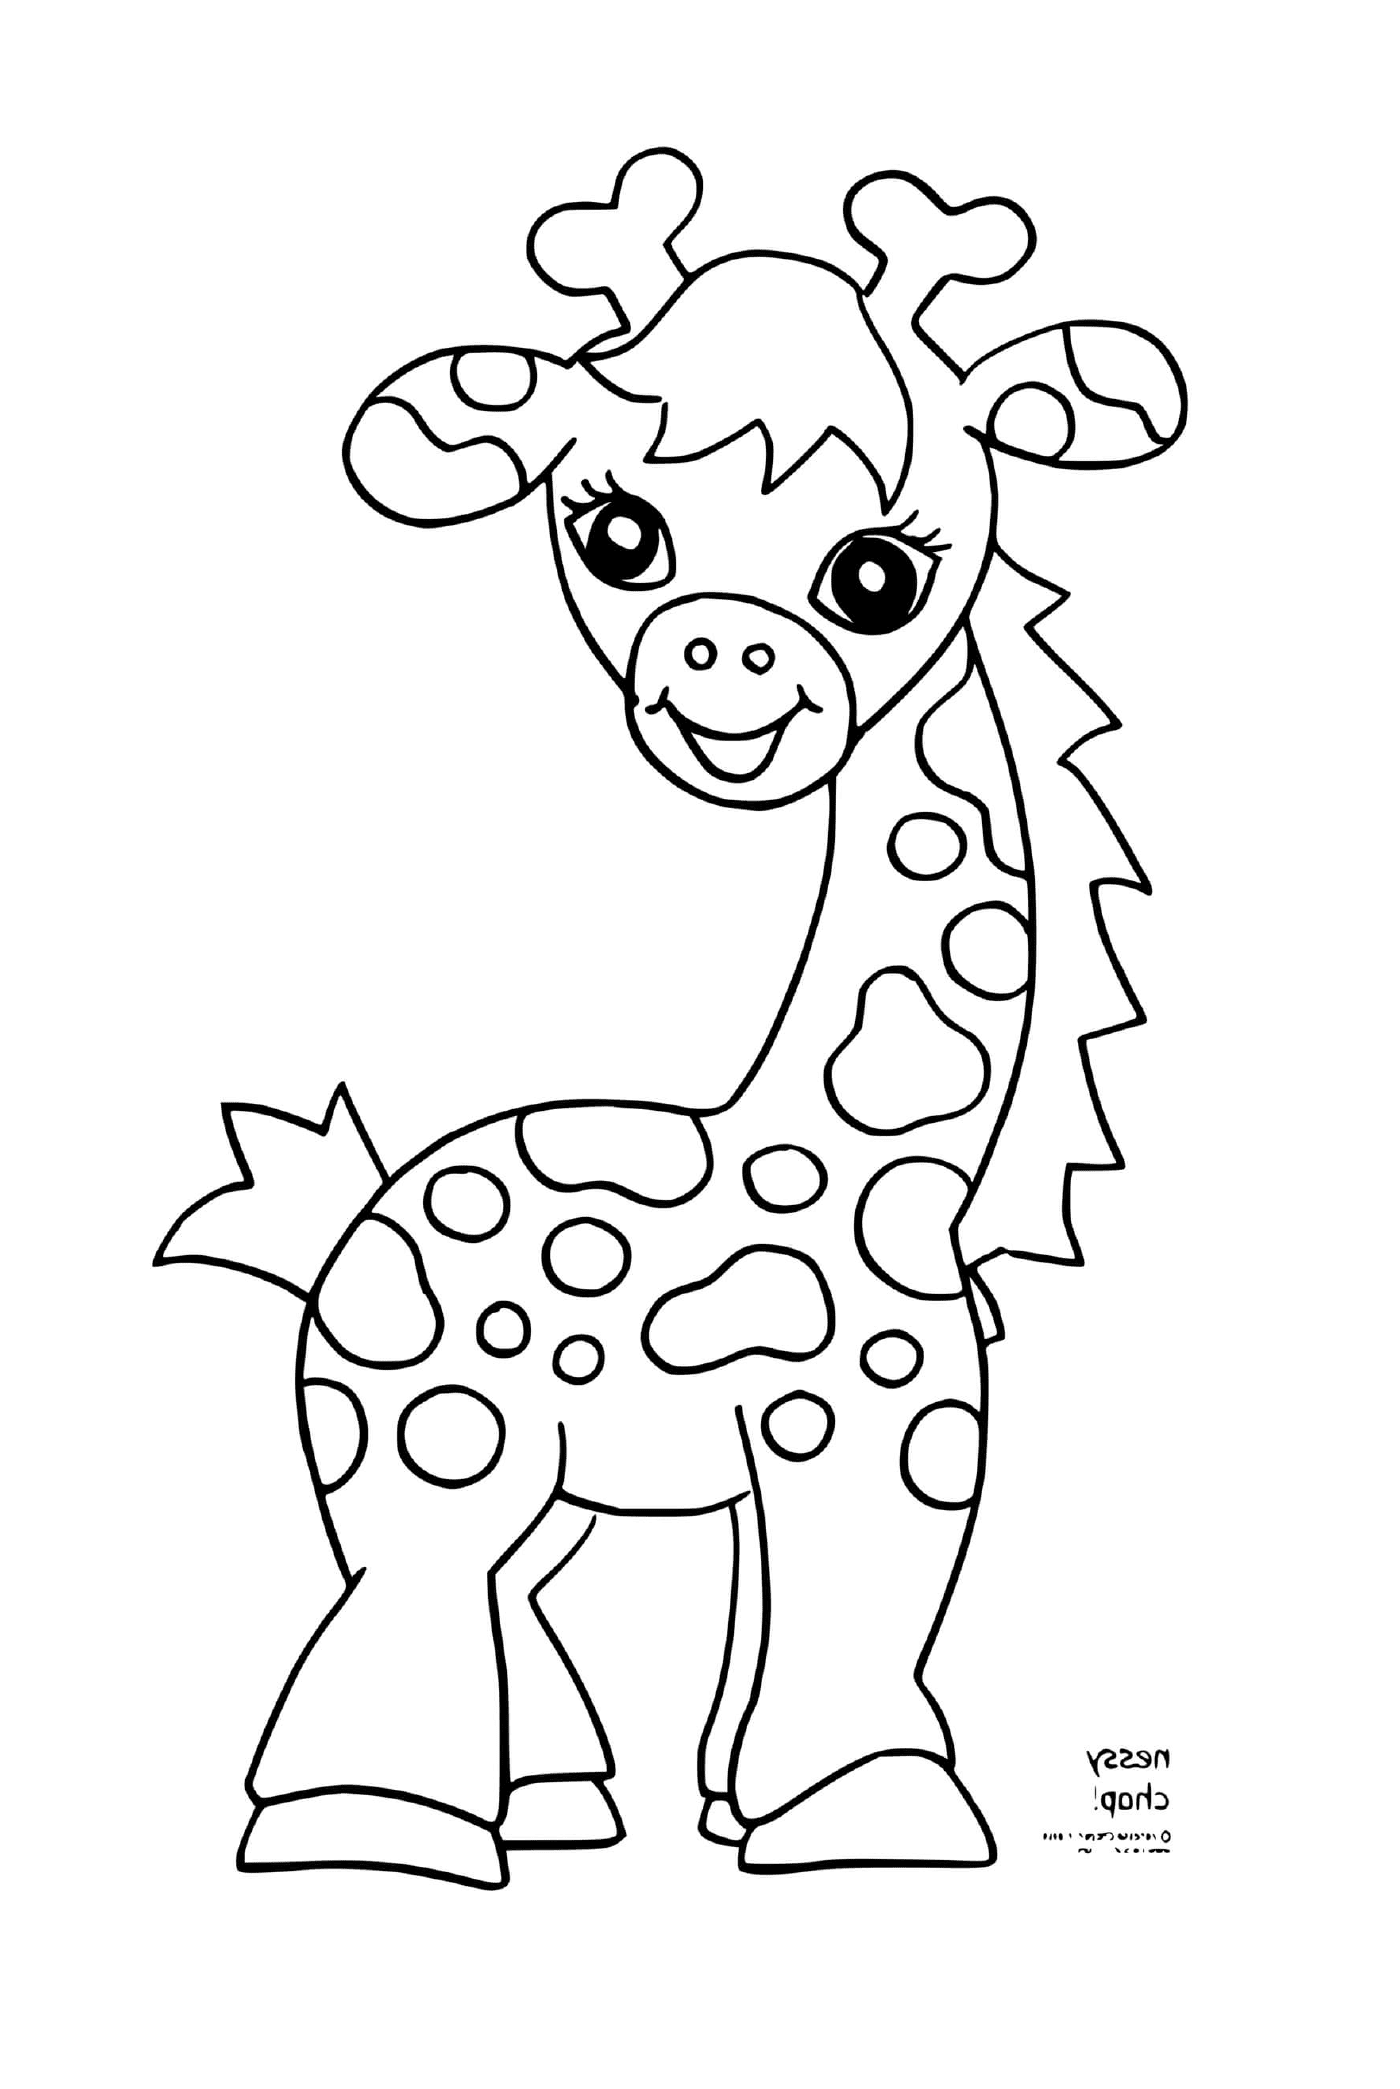  Giraffe smiling with pretty eyes 